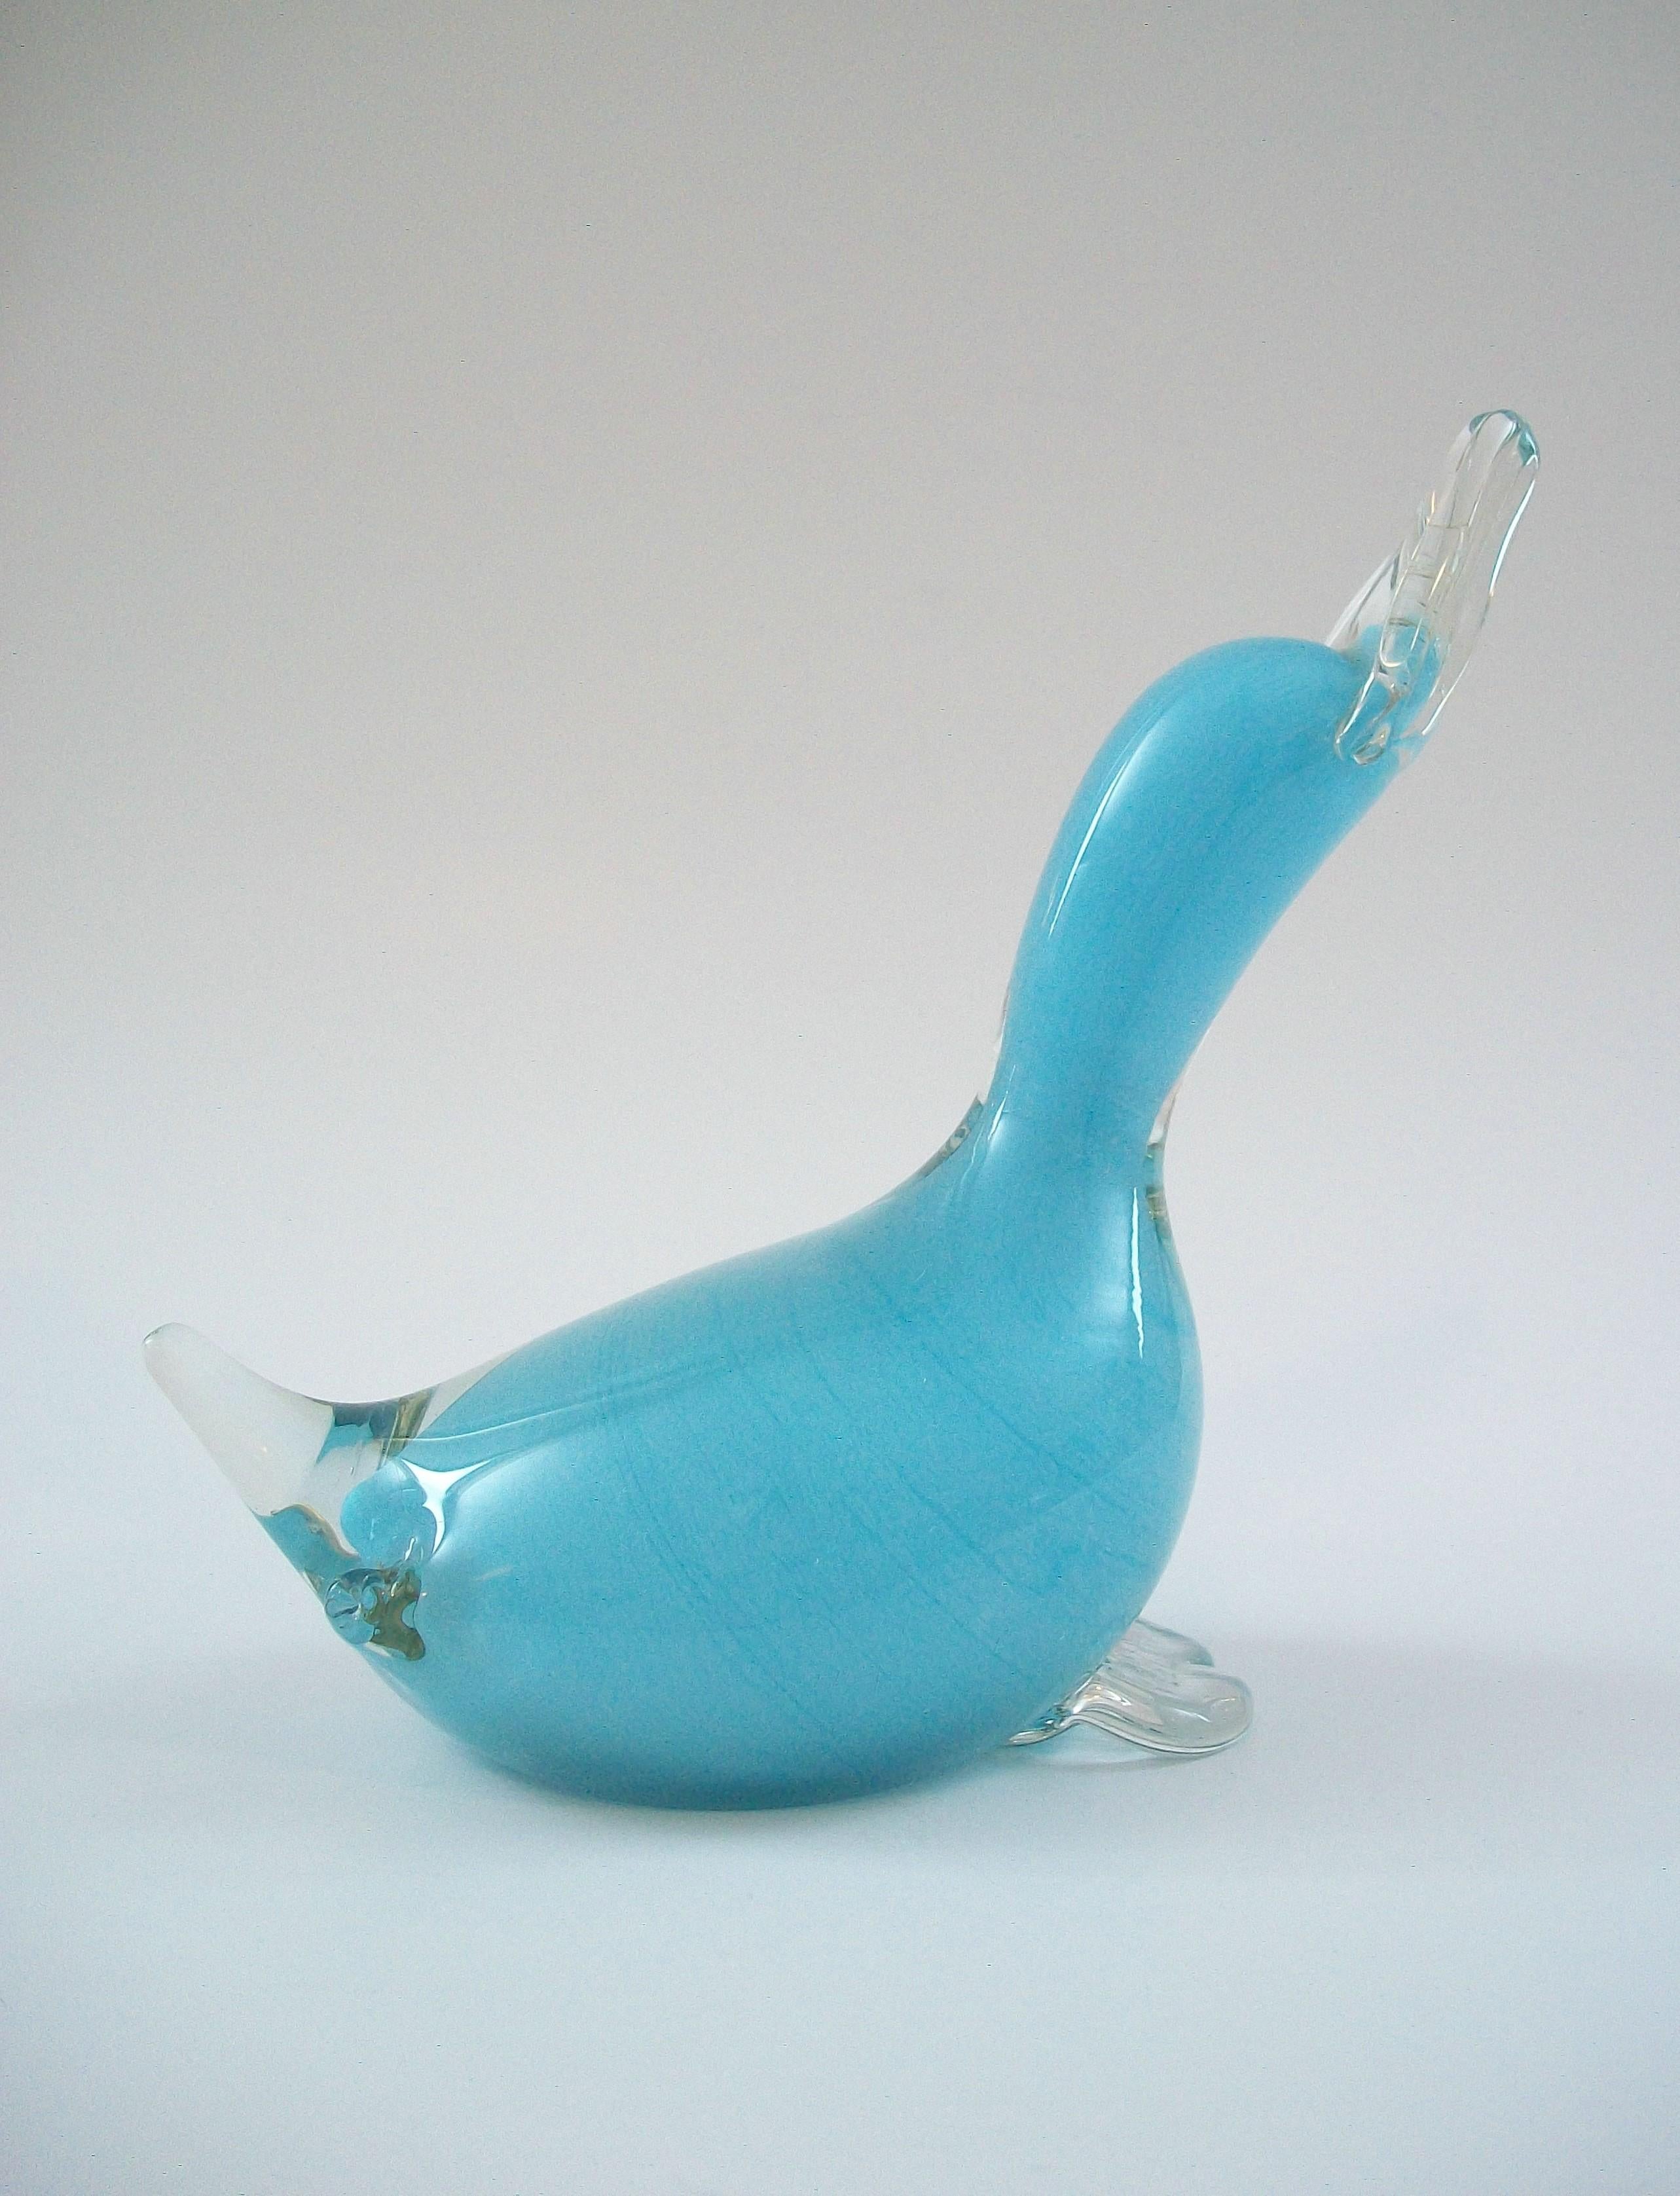 Finnish OY KUMELA - ARMANDO JACOBINO - Art Glass Duck Figure - Finland - Circa 1970's For Sale